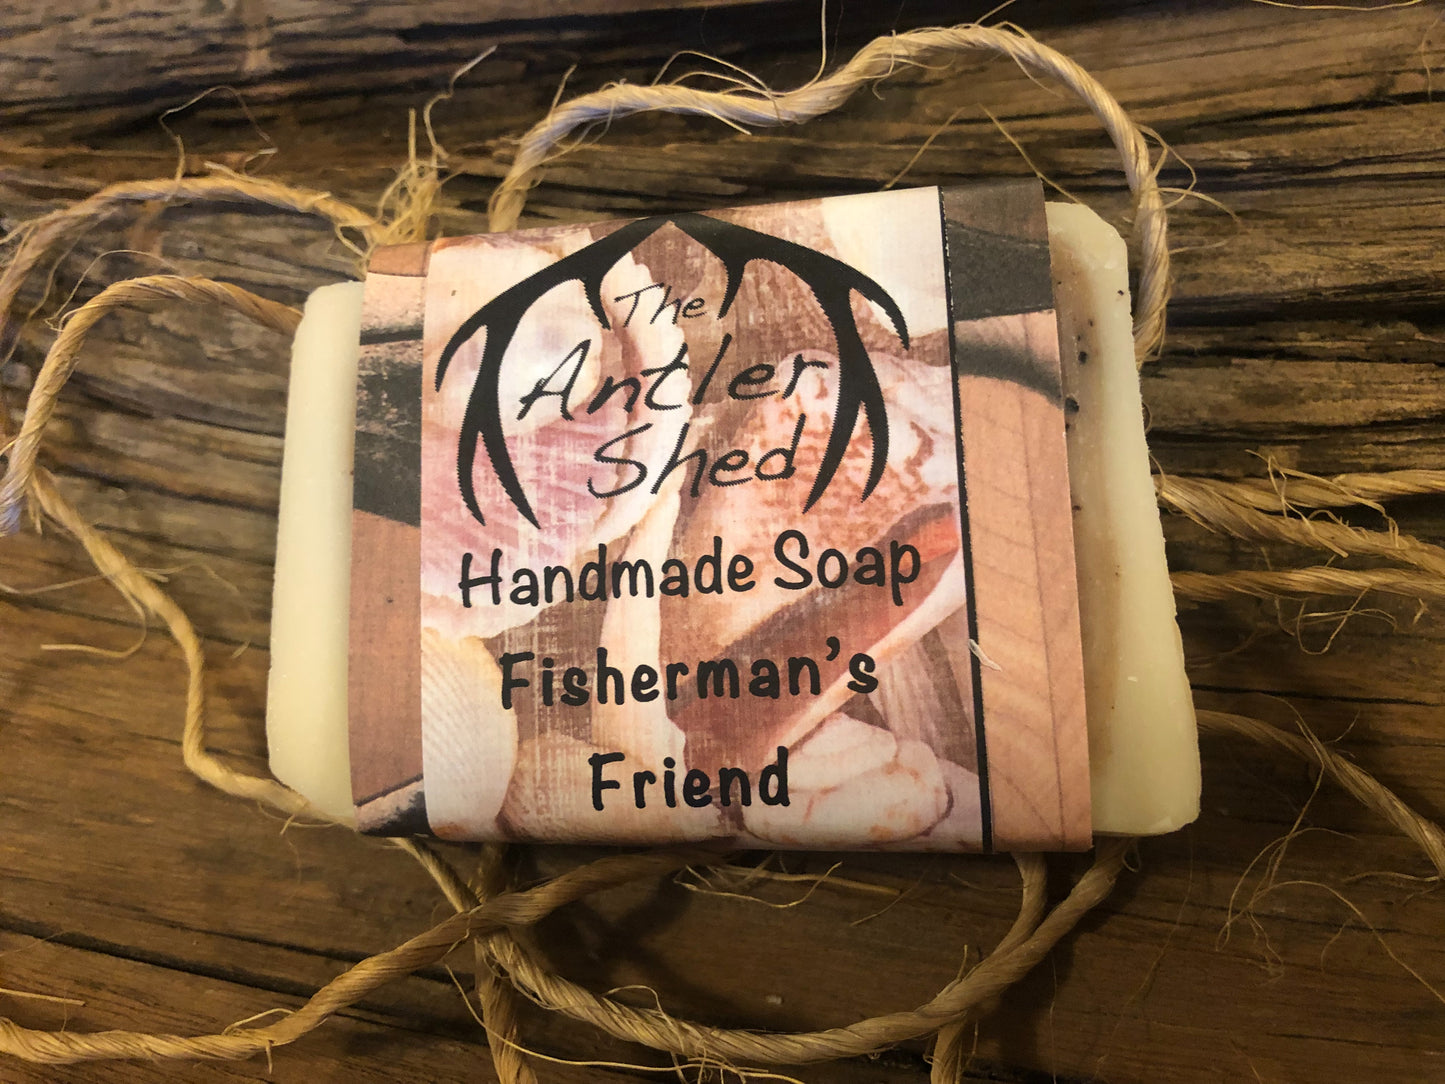 Fisherman’s Friend Handmade Soap